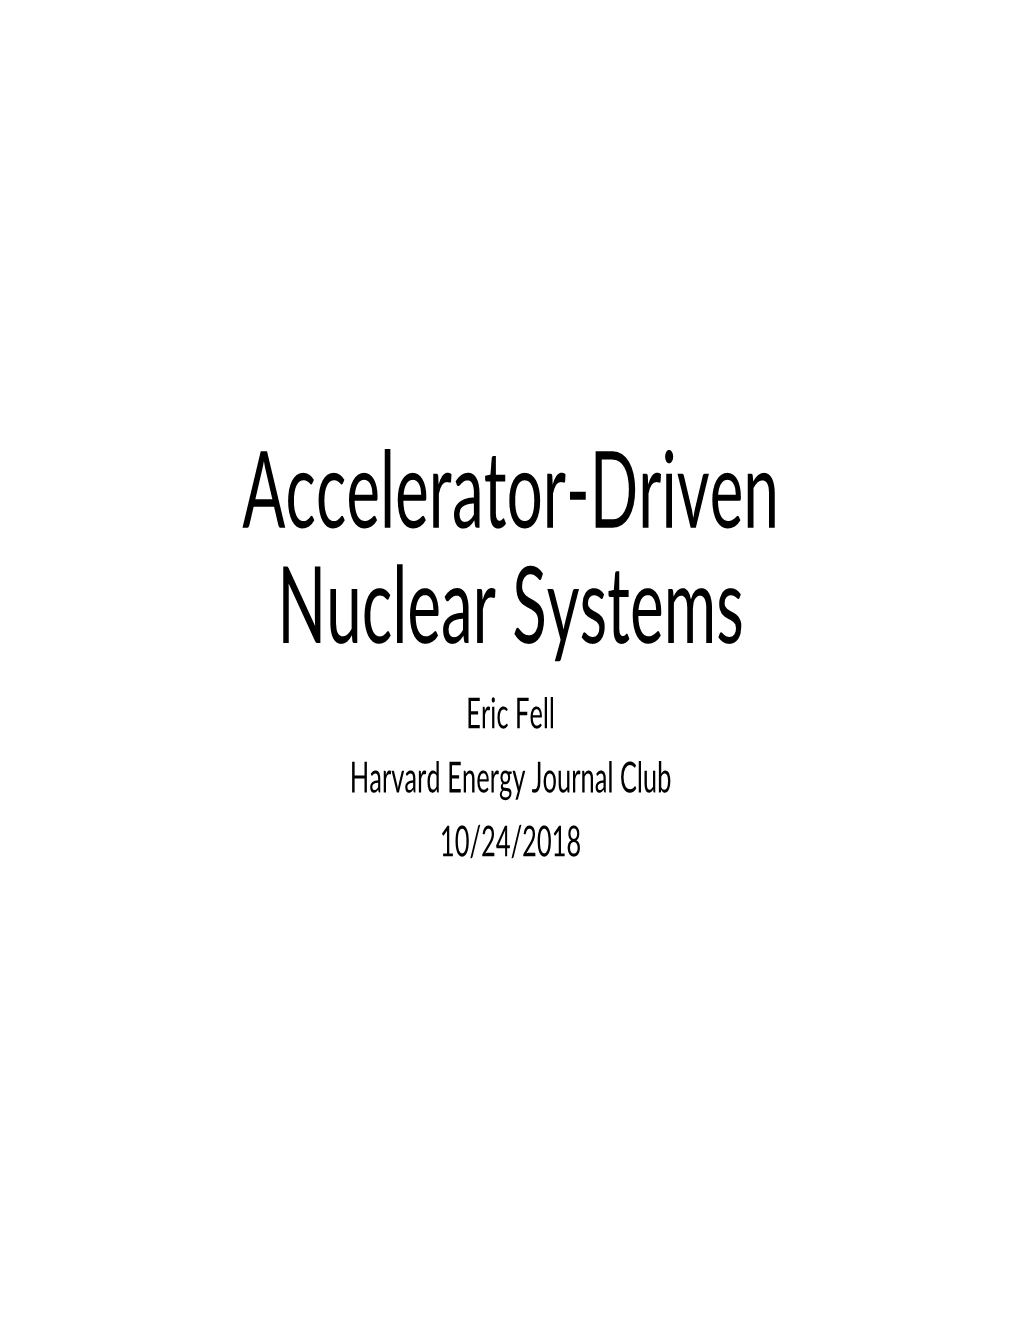 Accelerator-Driven Nuclear Systems Eric Fell Harvard Energy Journal Club 10/24/2018 Outline